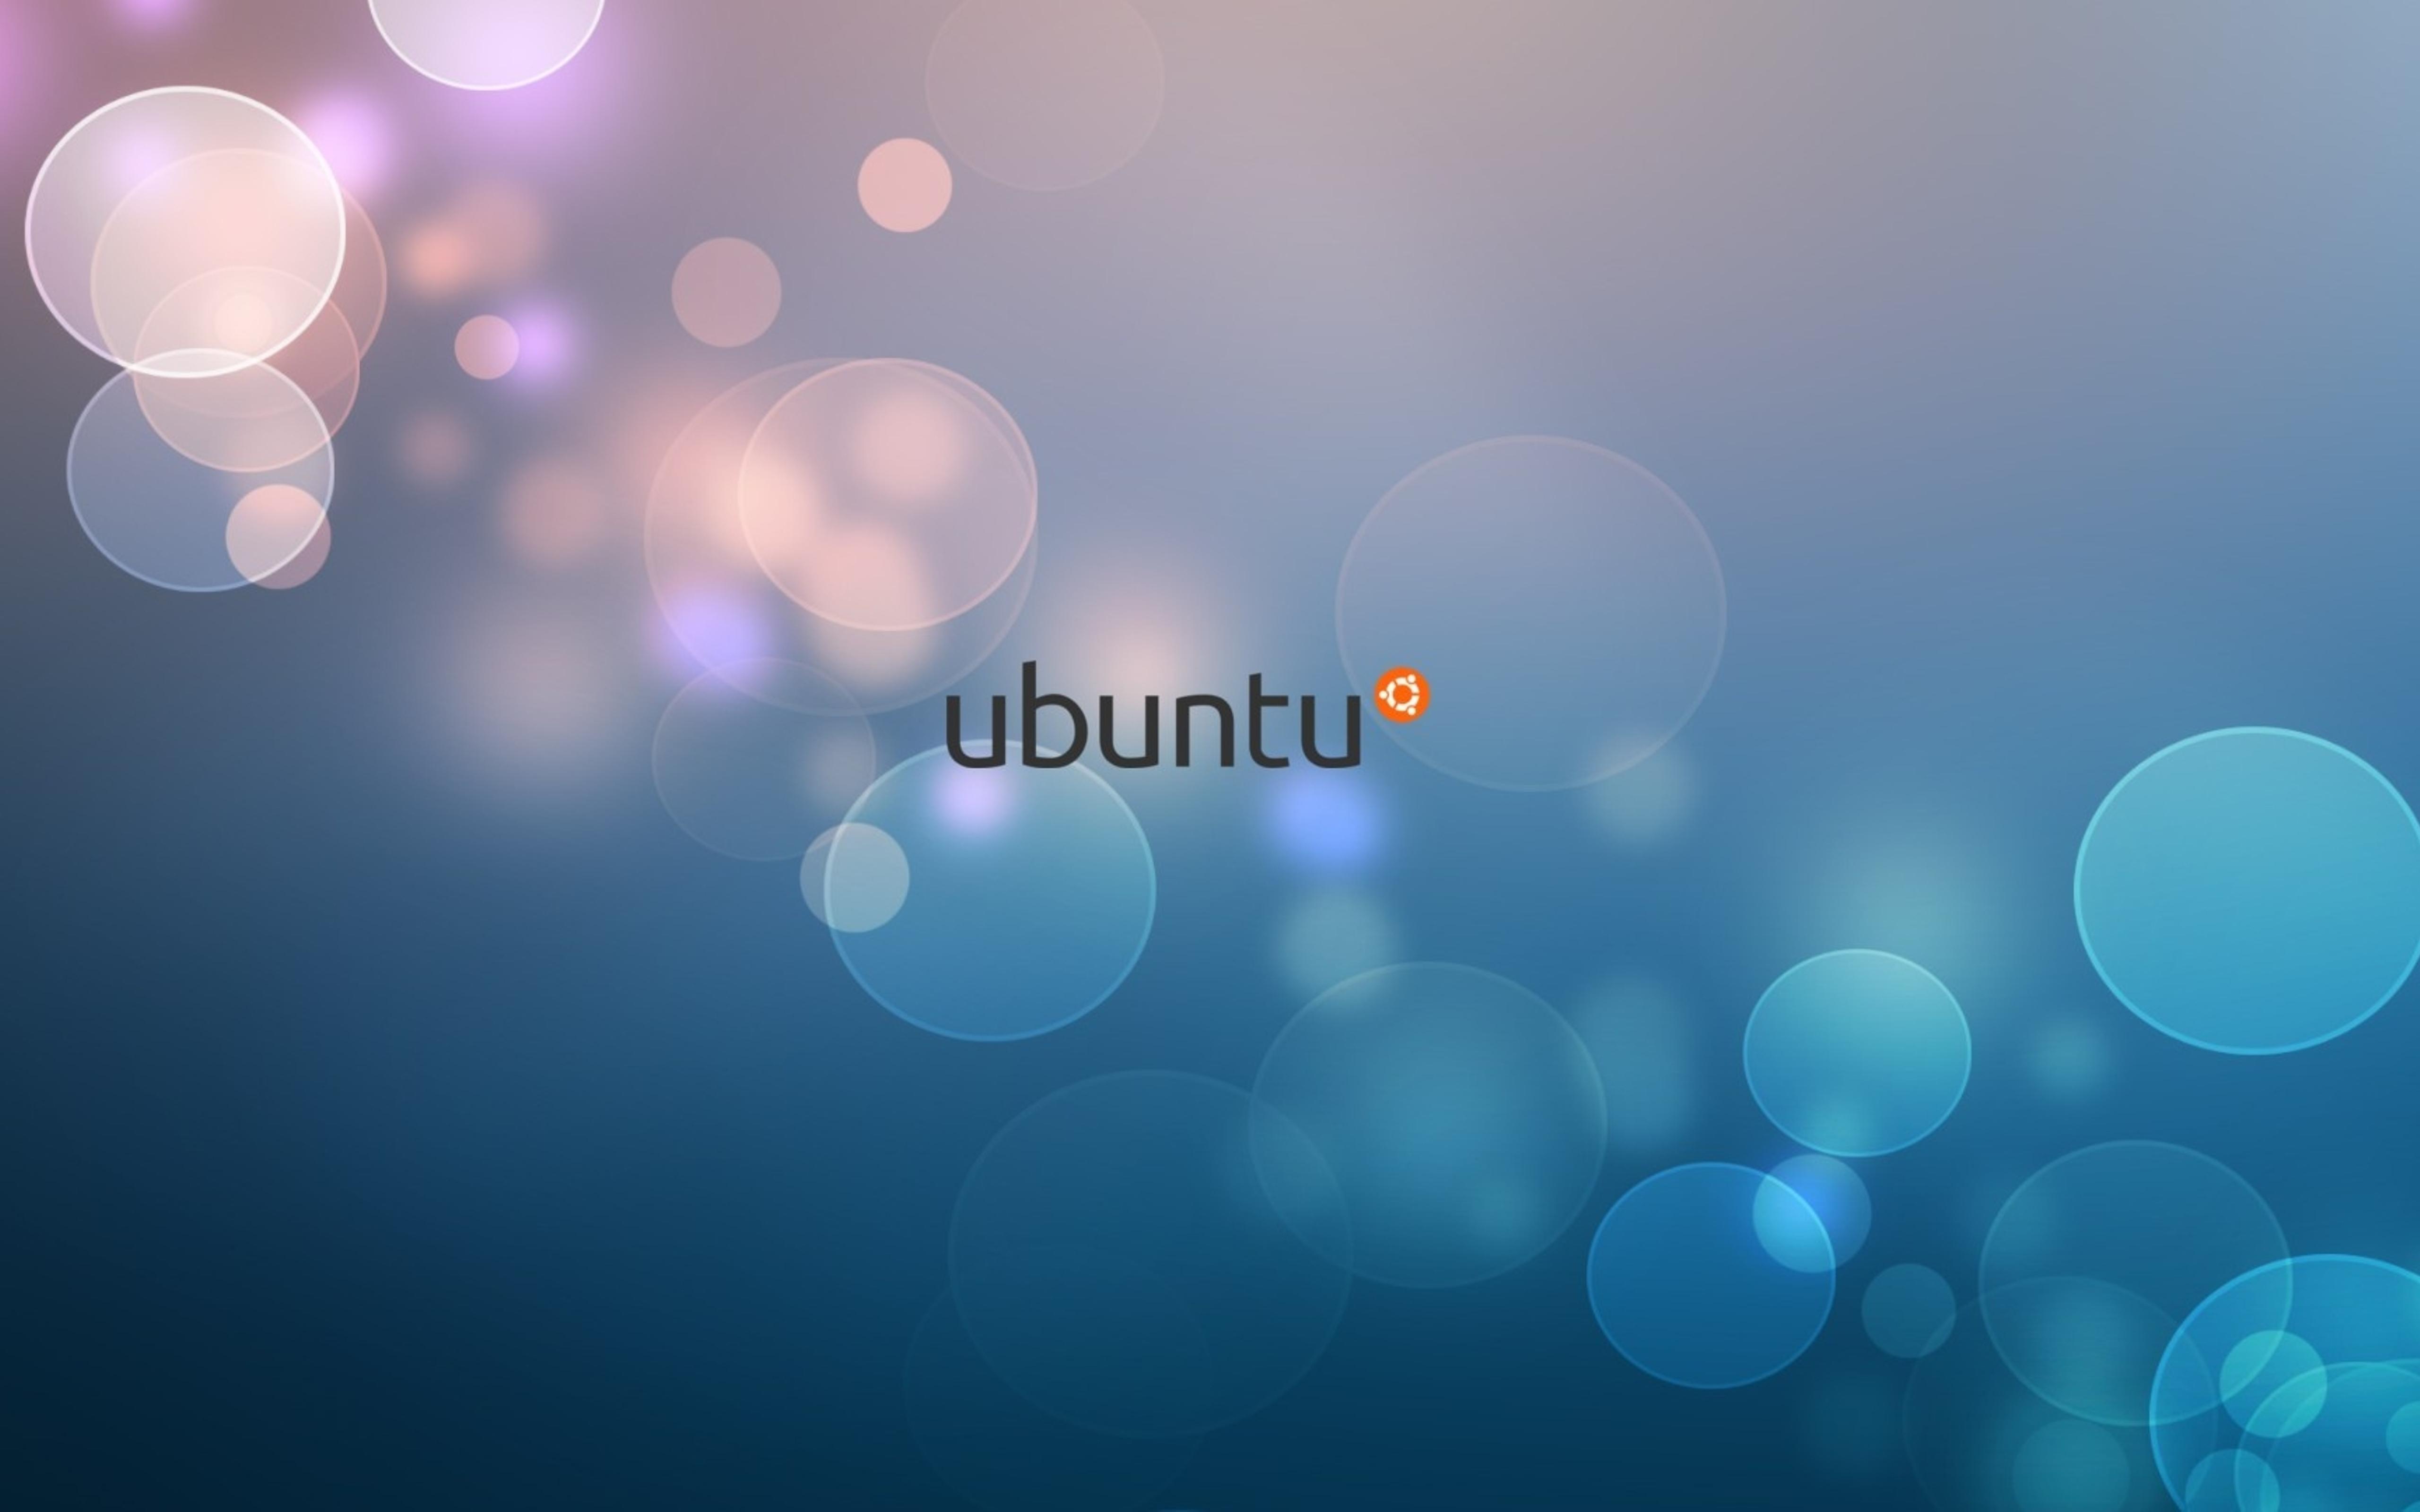 5120 x 3200 · jpeg - Ubuntu minimalistic wallpaper - Blue bubbles Wallpaper Download 5120x3200